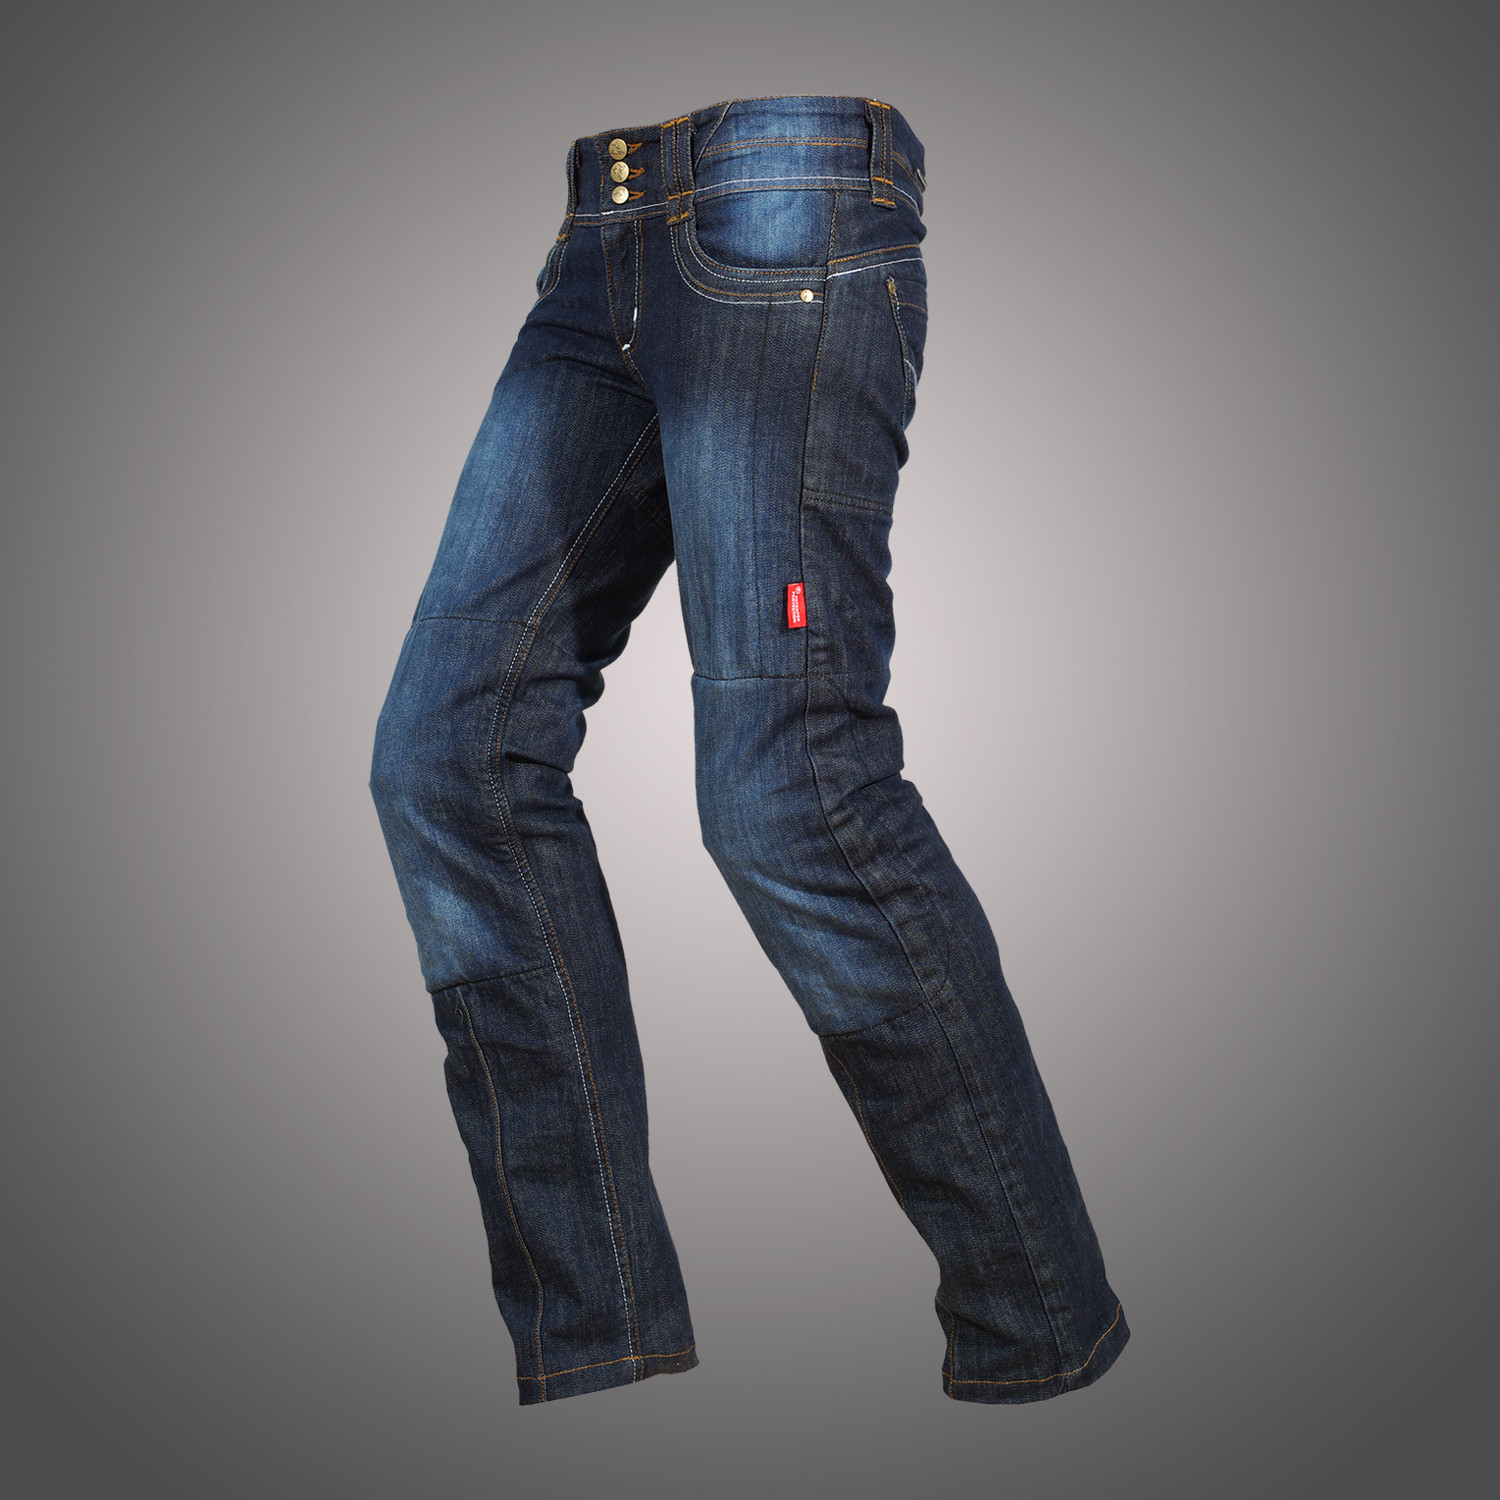 4SR Jeans biker jeans